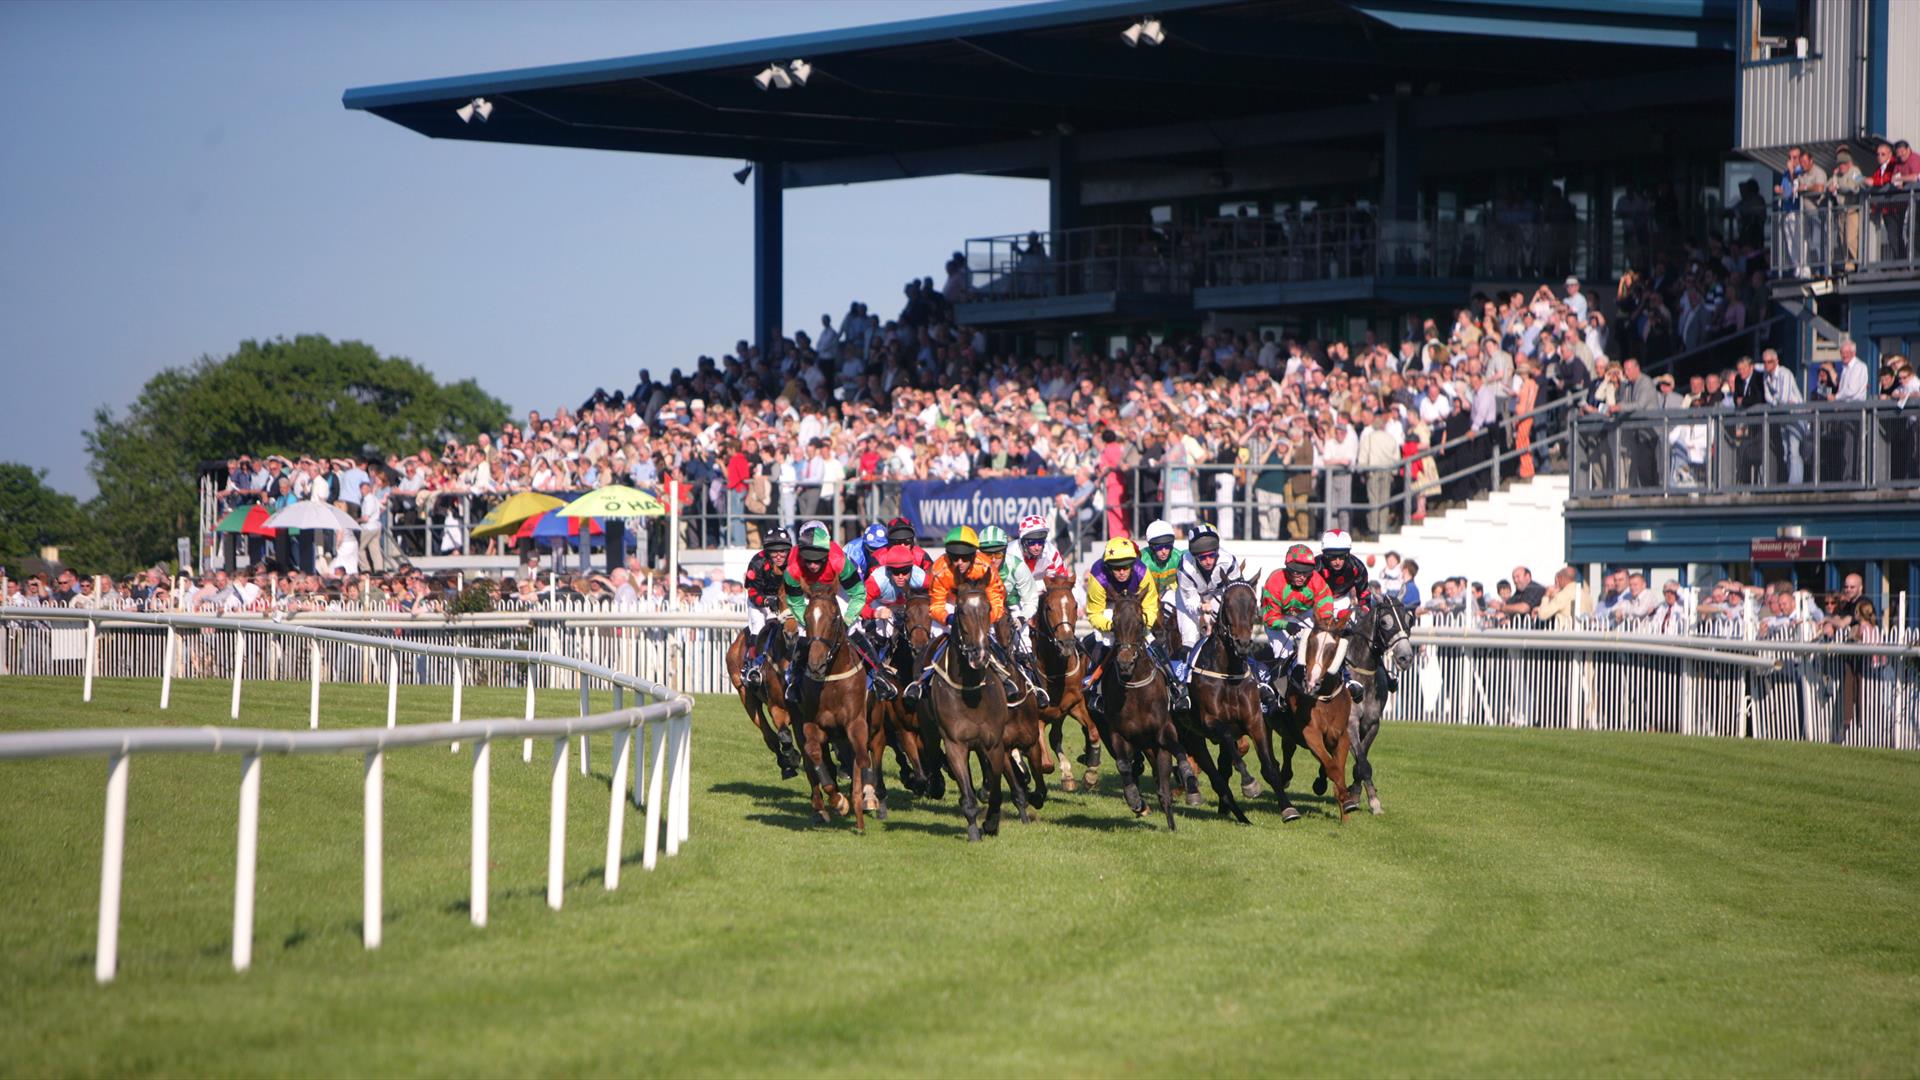 Horses racing at Down Royal Race Course